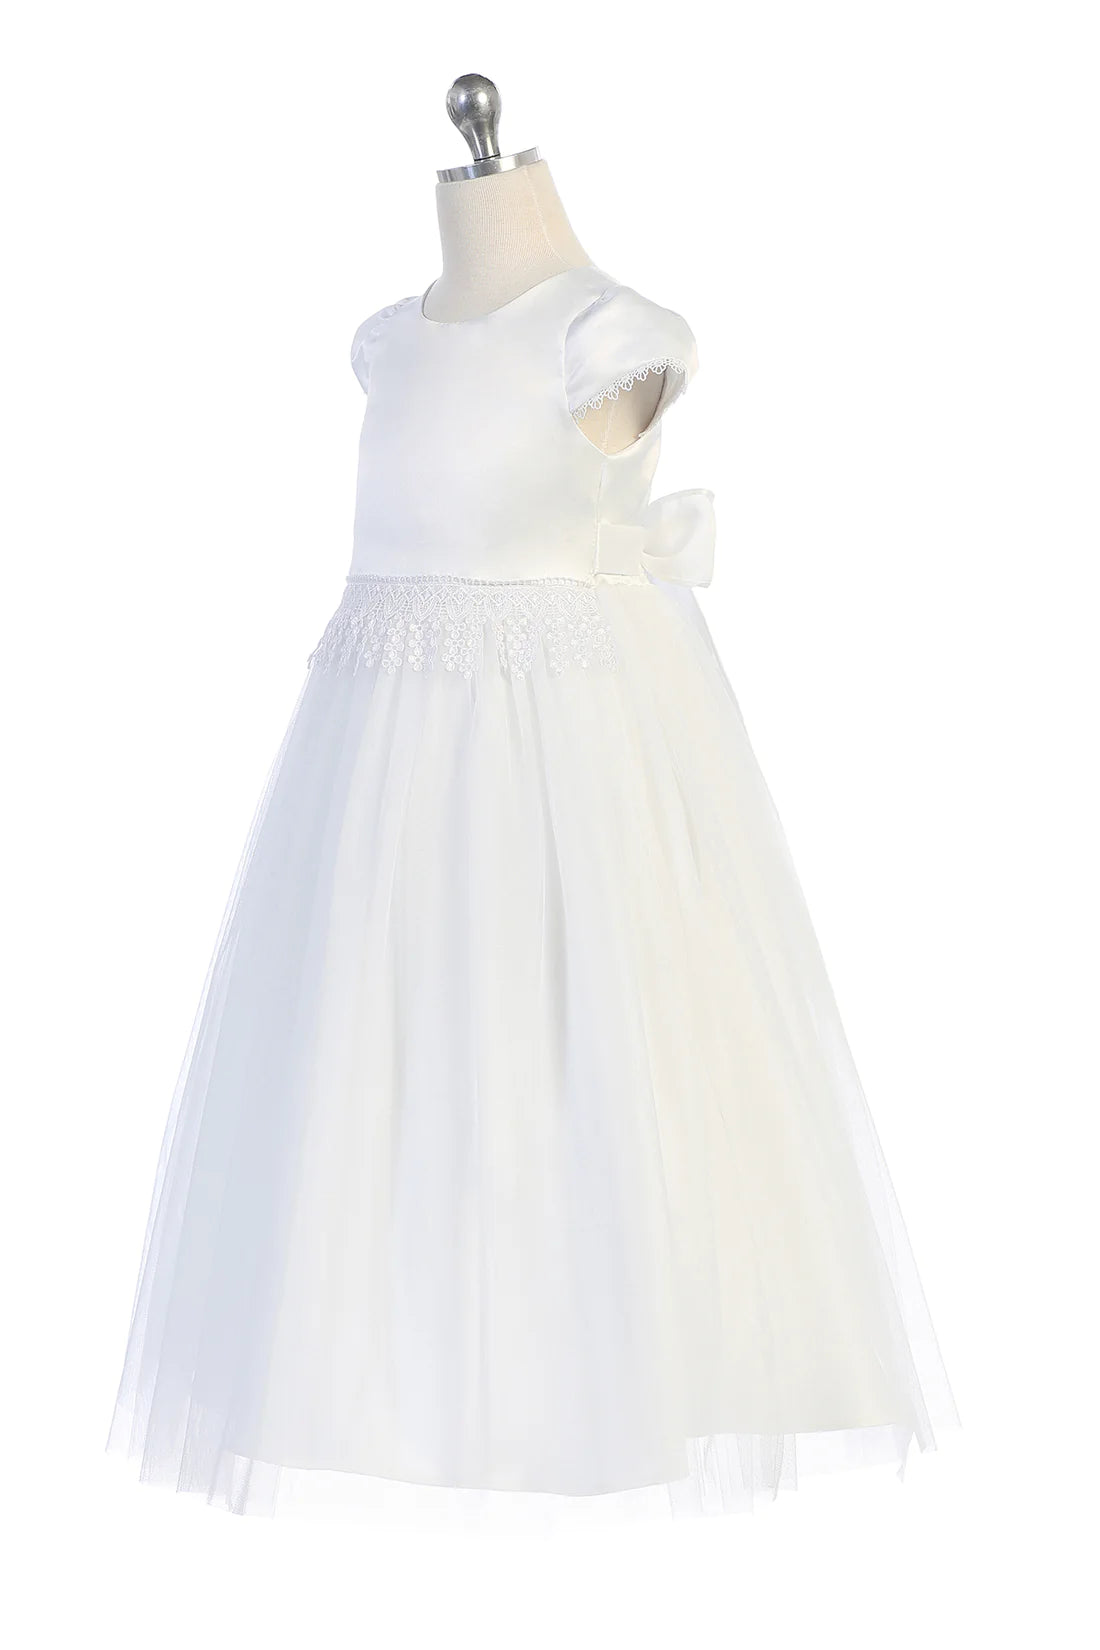 KD460- Chandelier Trim Communion Dress